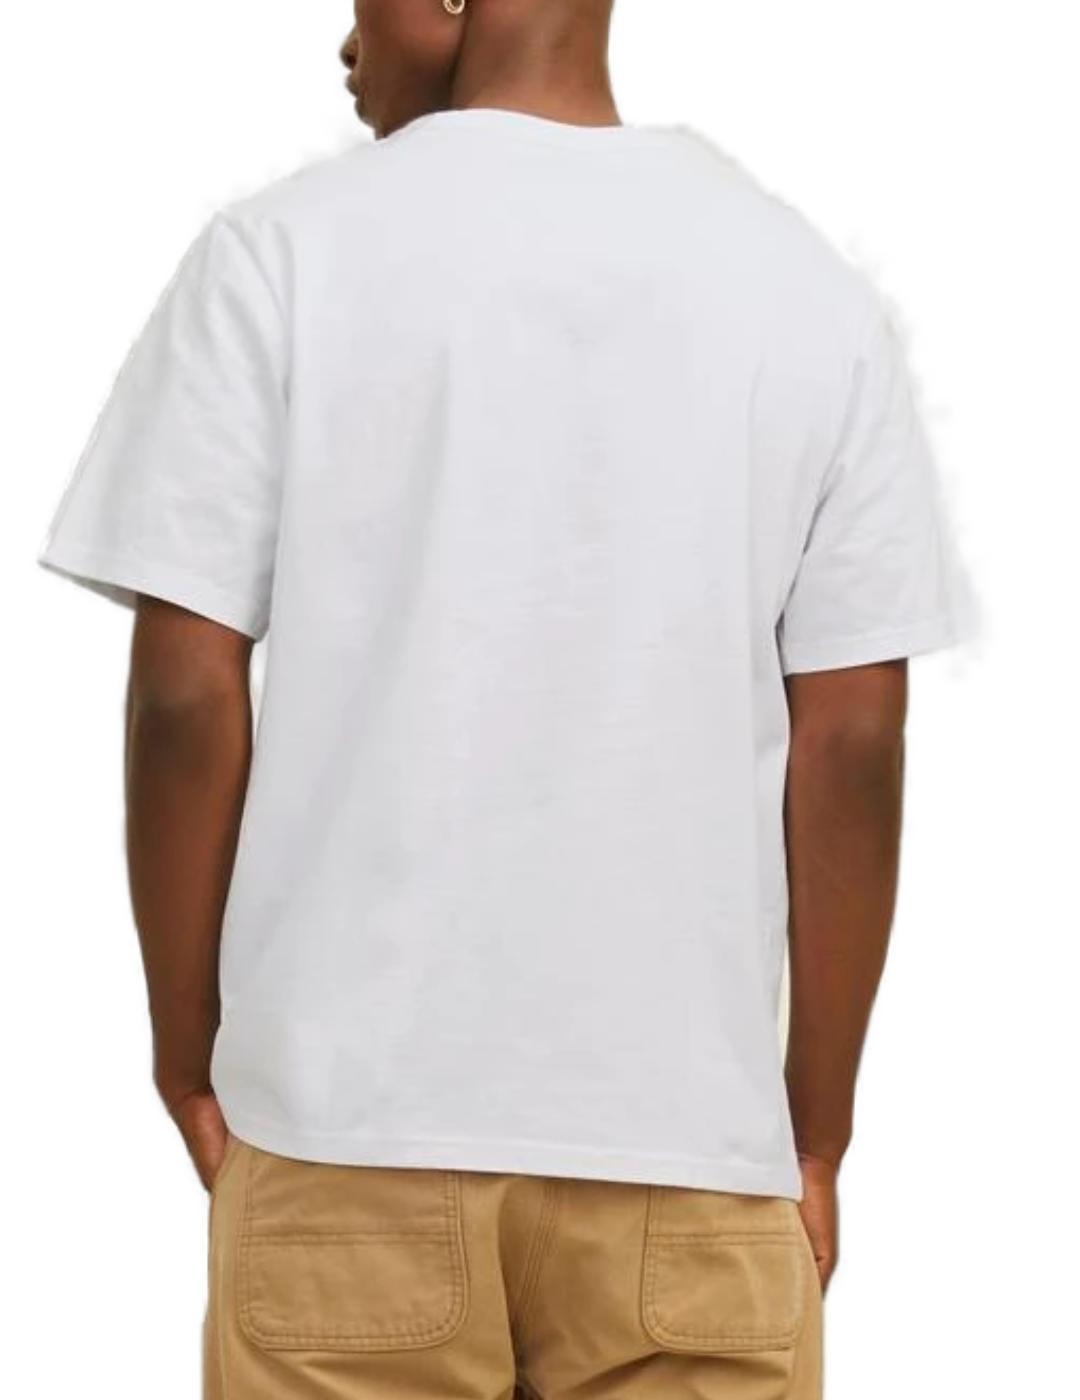 Camiseta Jack&Jones Brooklyn blanco manga corta para mujer